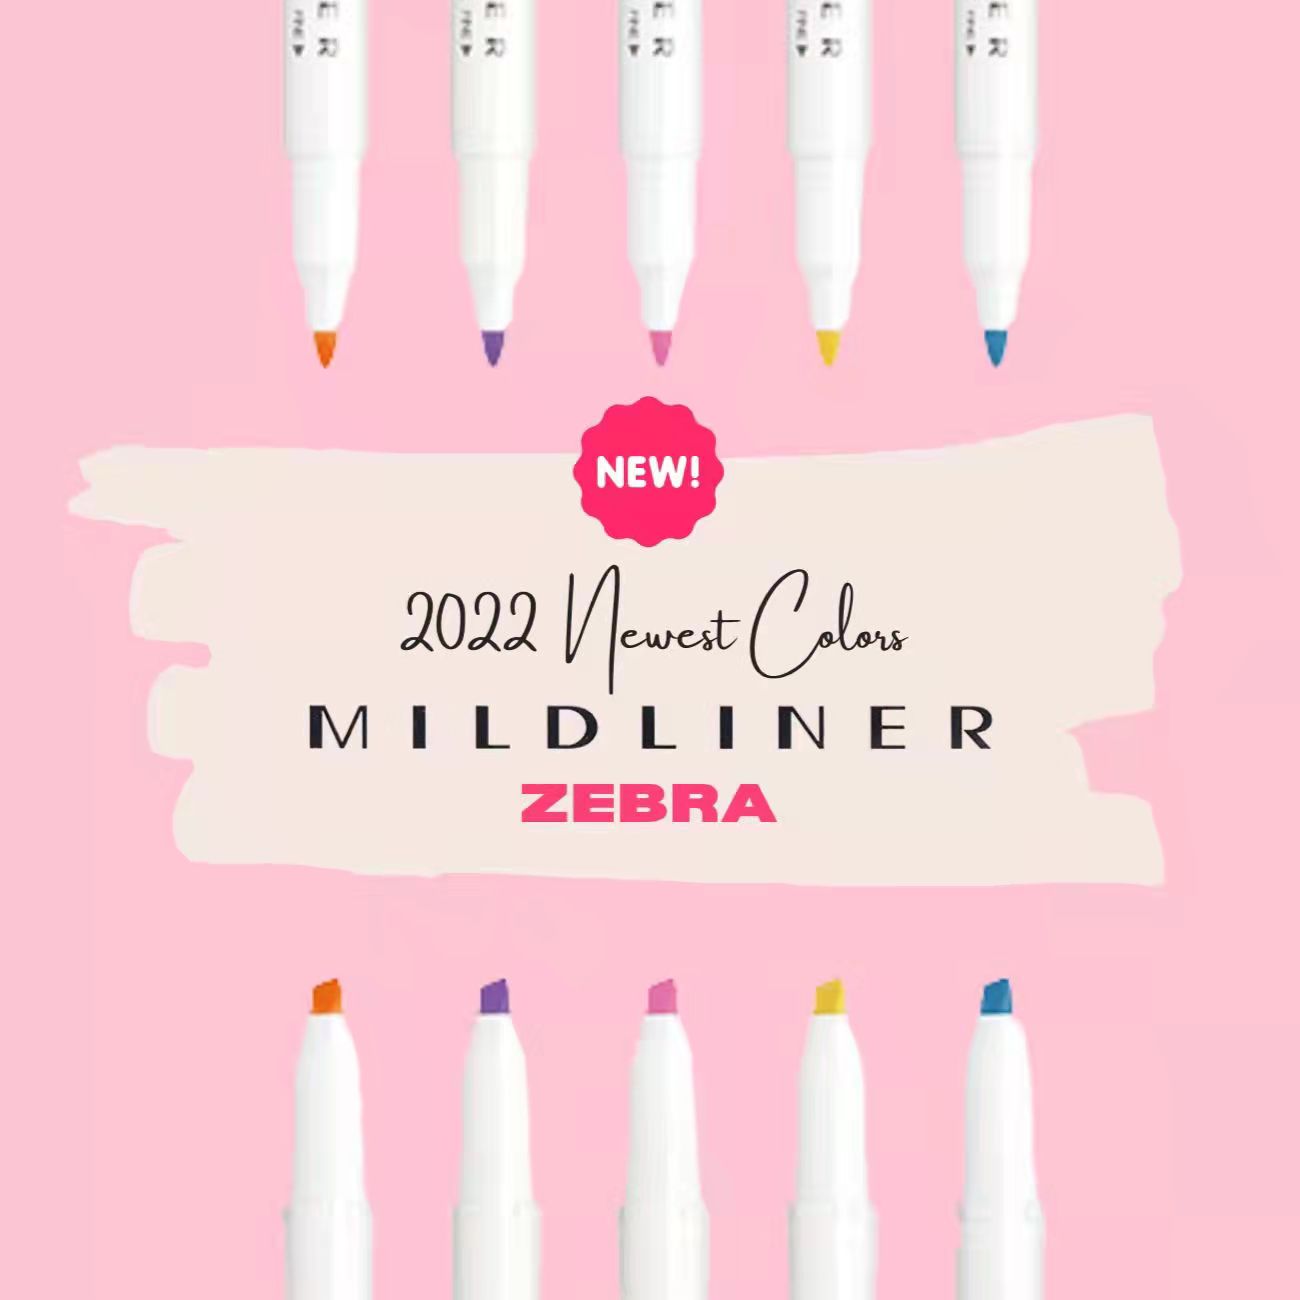 Zebra Mildliner New Colors for 2022!